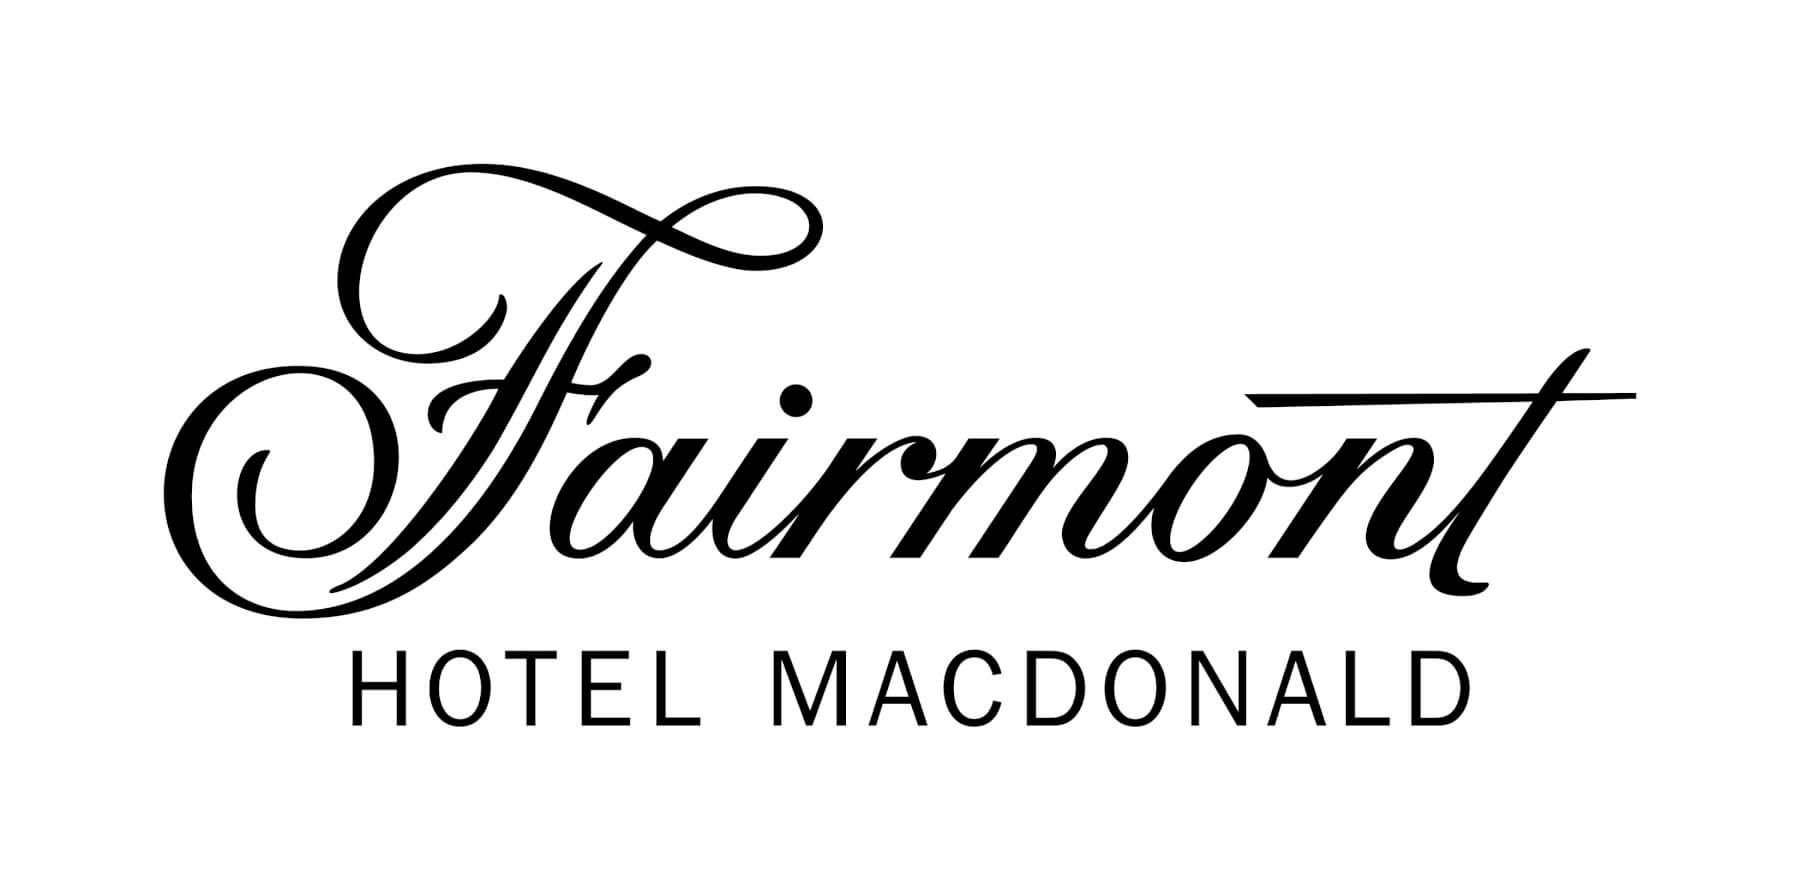 Fairmont Macdonald Hotel